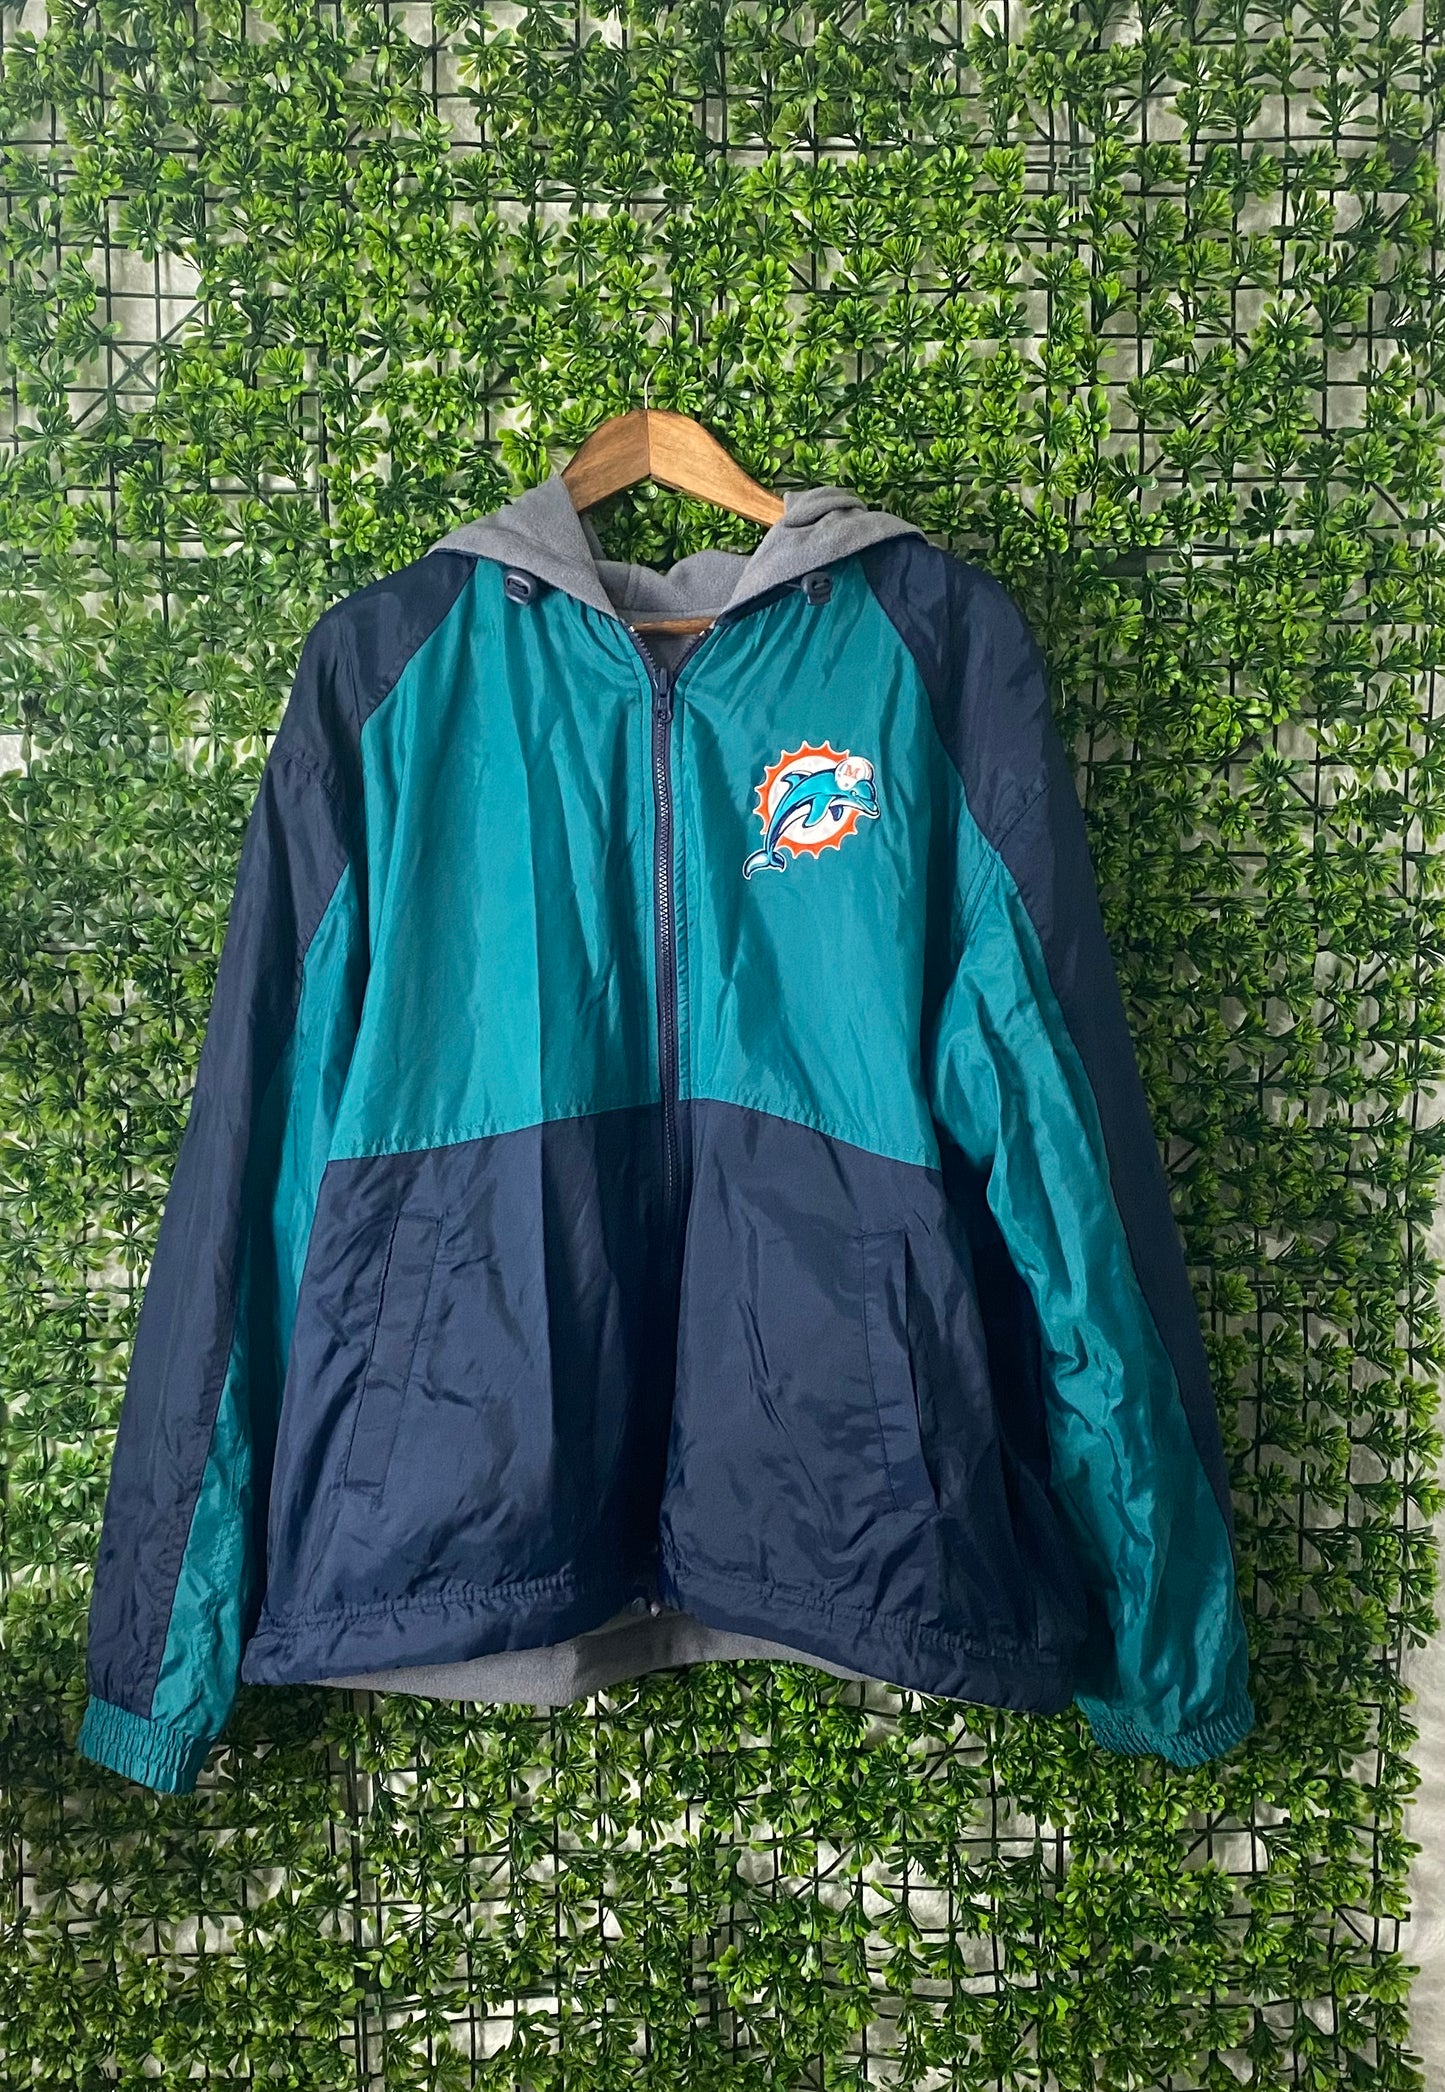 NFL Dolphins Reversible Jacket